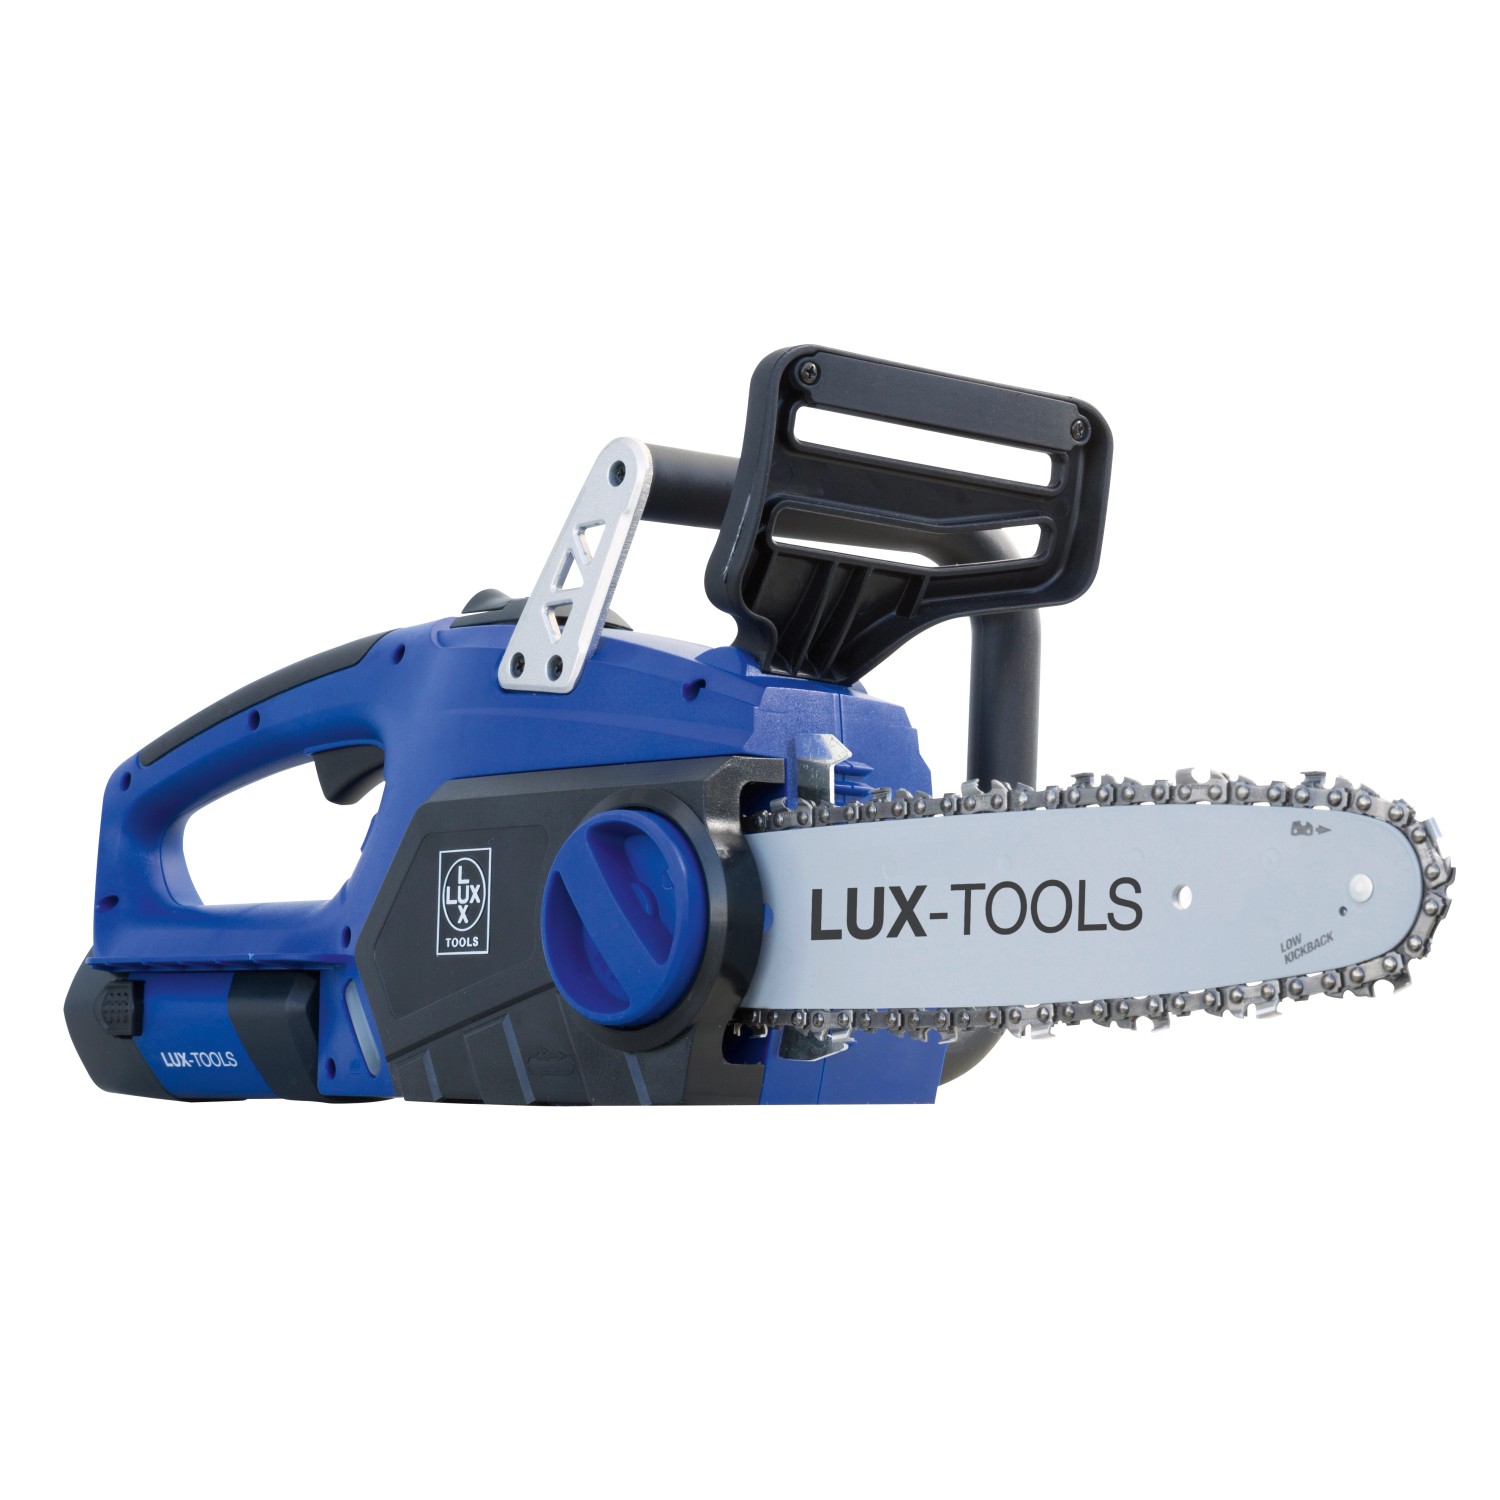 Lux tools аккумуляторная. Аккумуляторная цепная пила luxtol. Пила аккумуляторная цепная Lux Tools. Бензопила Lux -Tools euro2 45-45 мм. Аккумуляторная пила 18v Lux Tools.